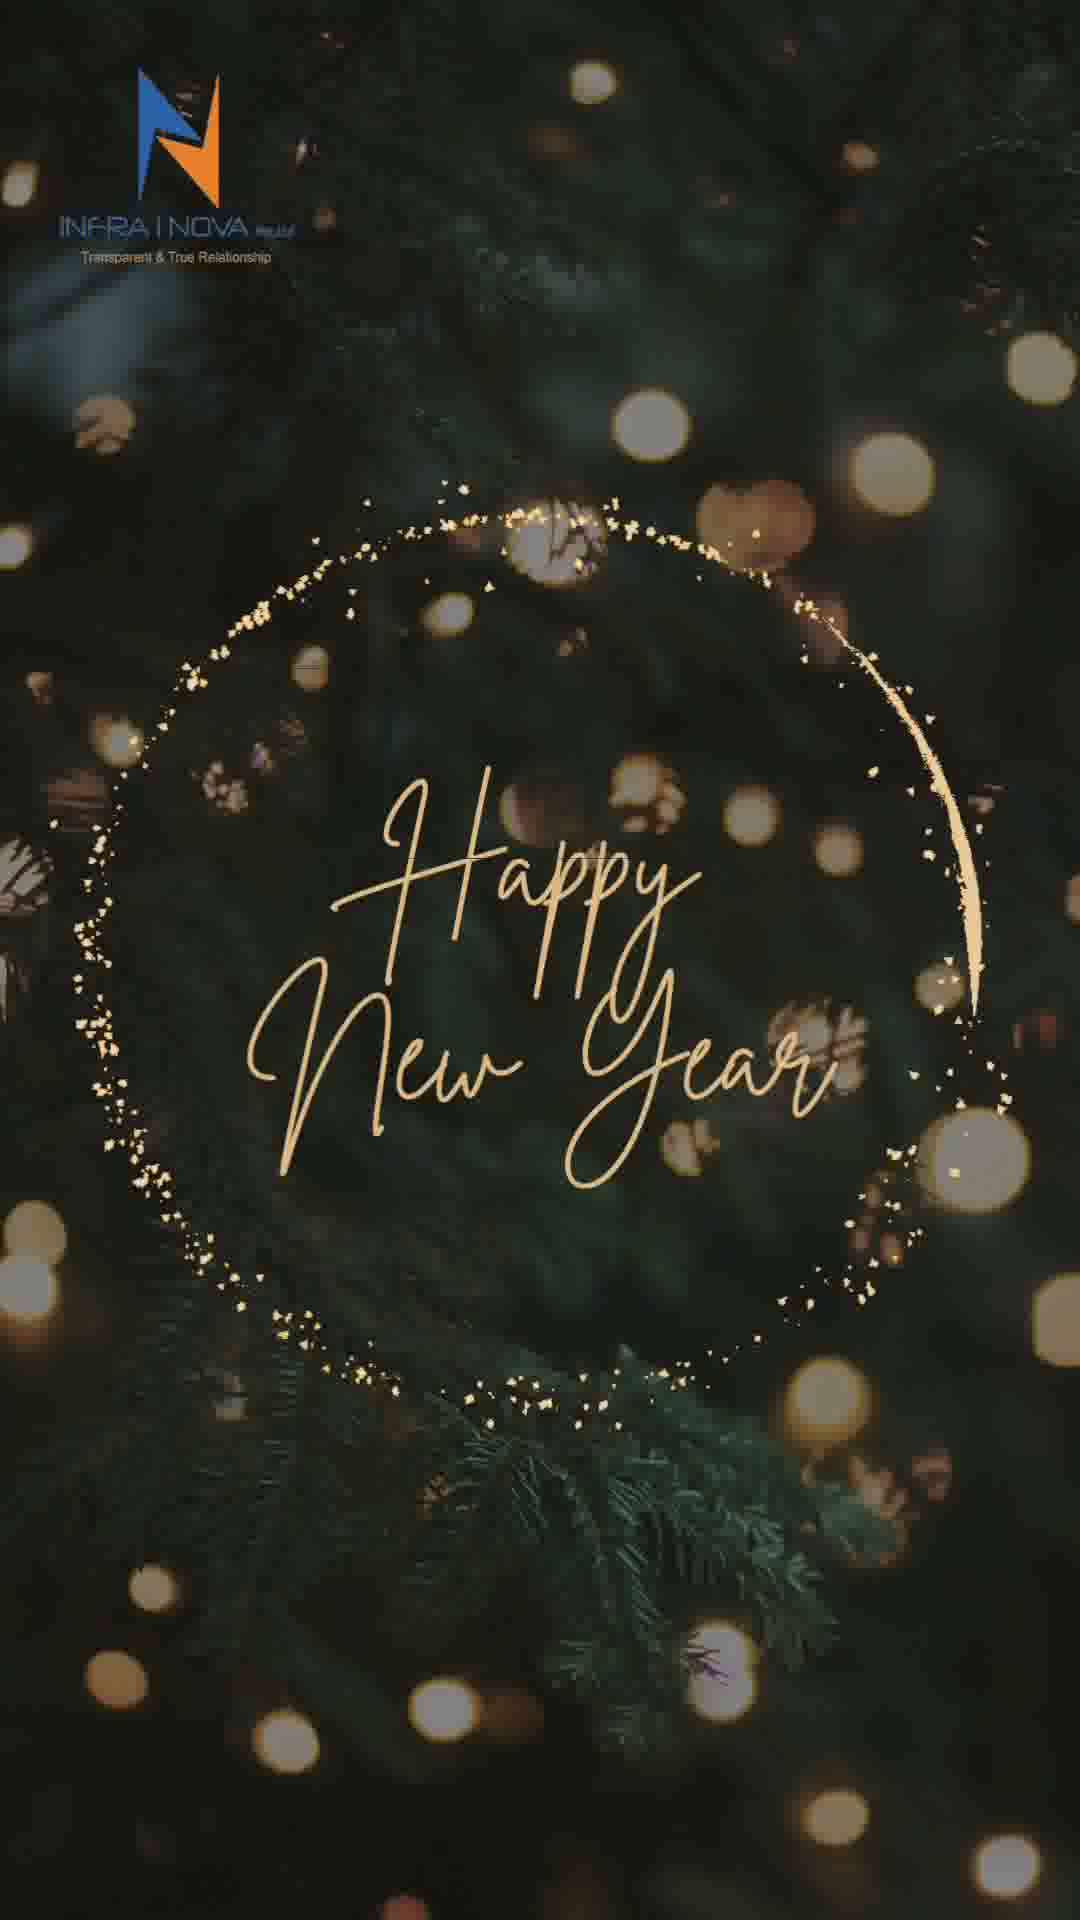 We wish you a Happy New Year | Infra I Nova Celebrating New Year 2023 | 
#infrainova
#infrainovadesign
#newyear
#architect